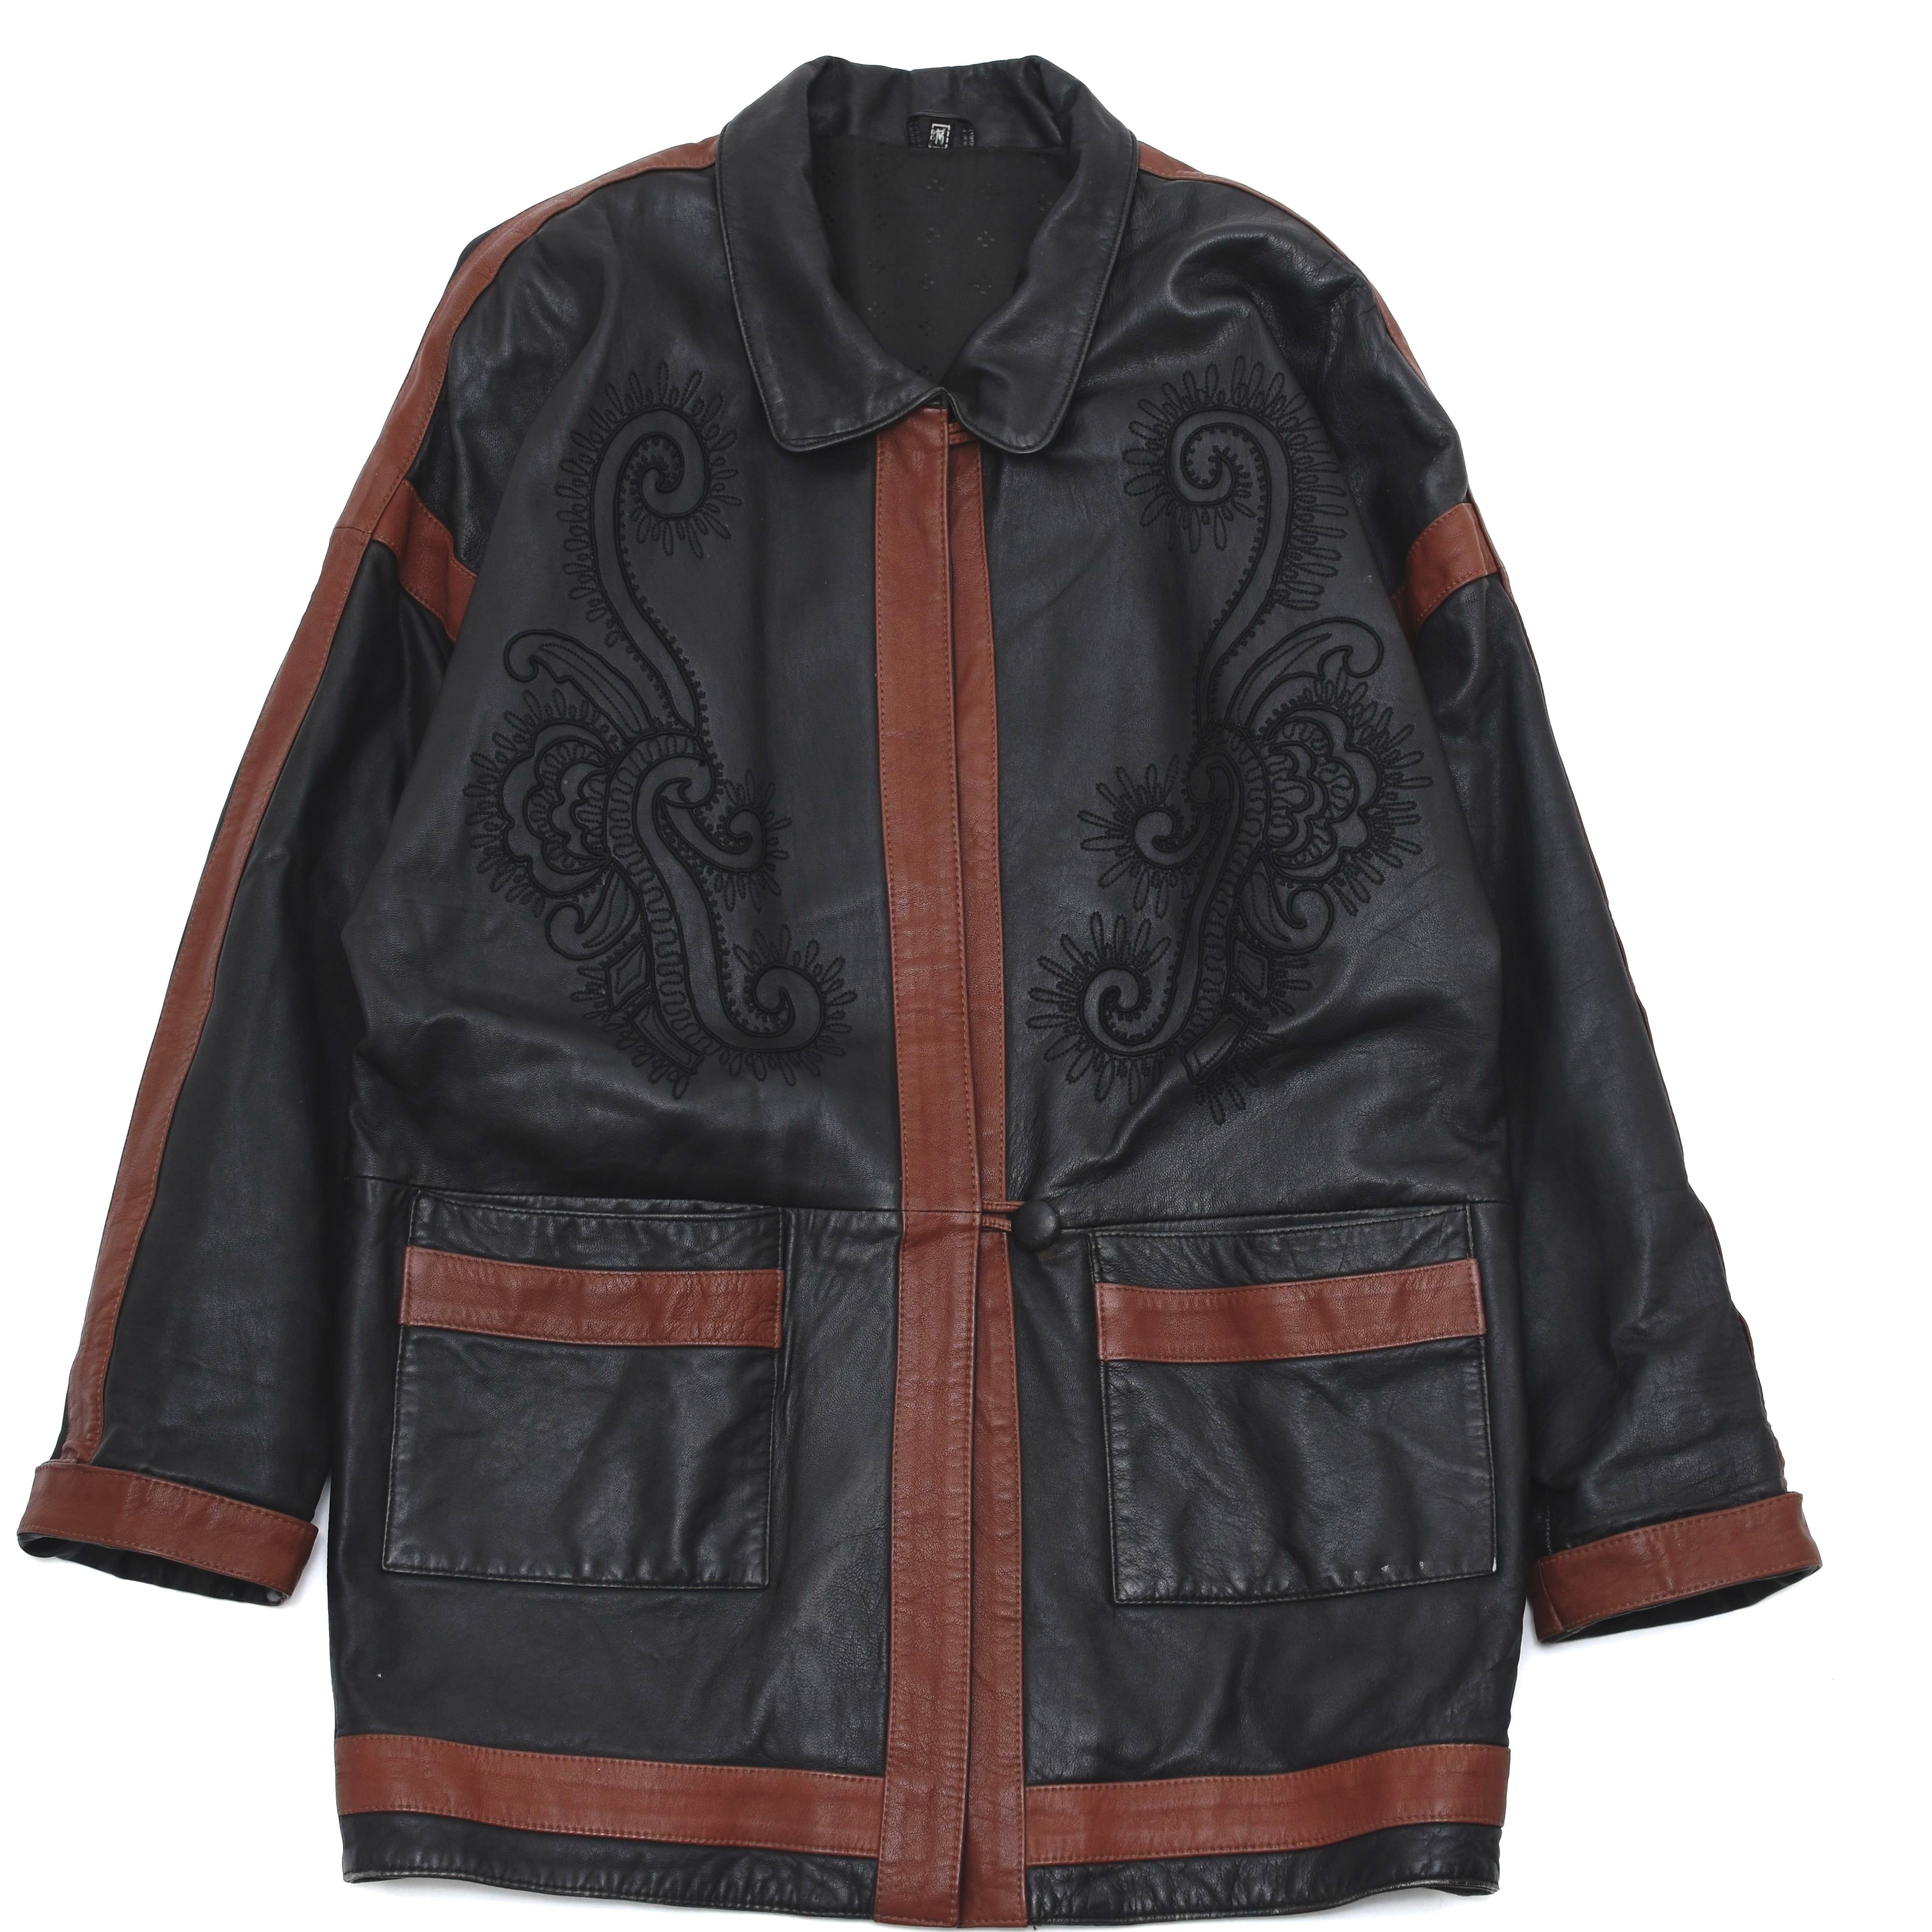 Unisex embroidery leather design coat